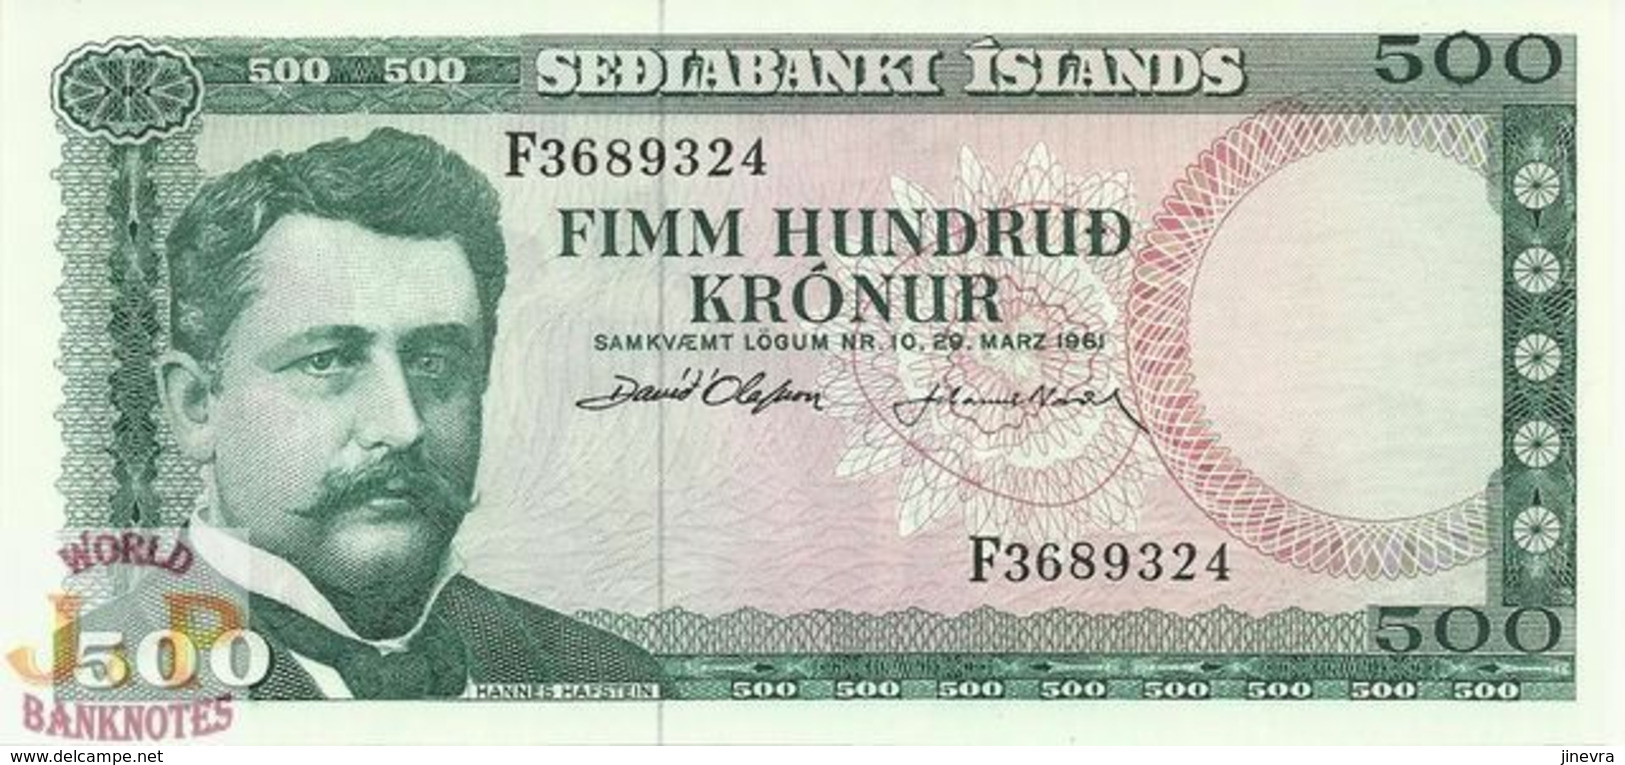 ICELAND 500 KRONUR 1961 PICK 45a UNC - Iceland